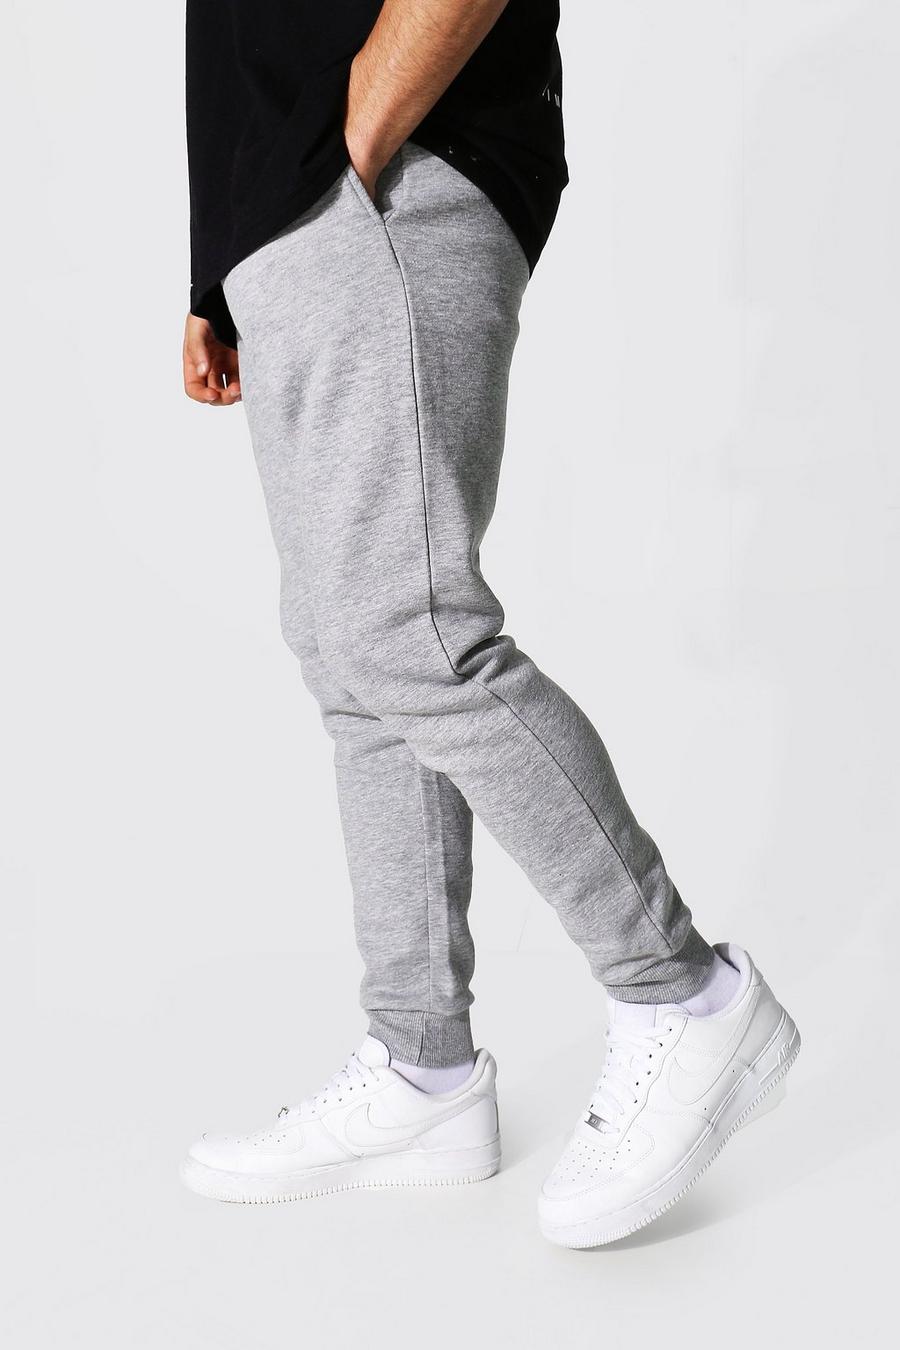 Bershka Pique Jogger In Gray ASOS Mens Clothing Styles,, 44% OFF